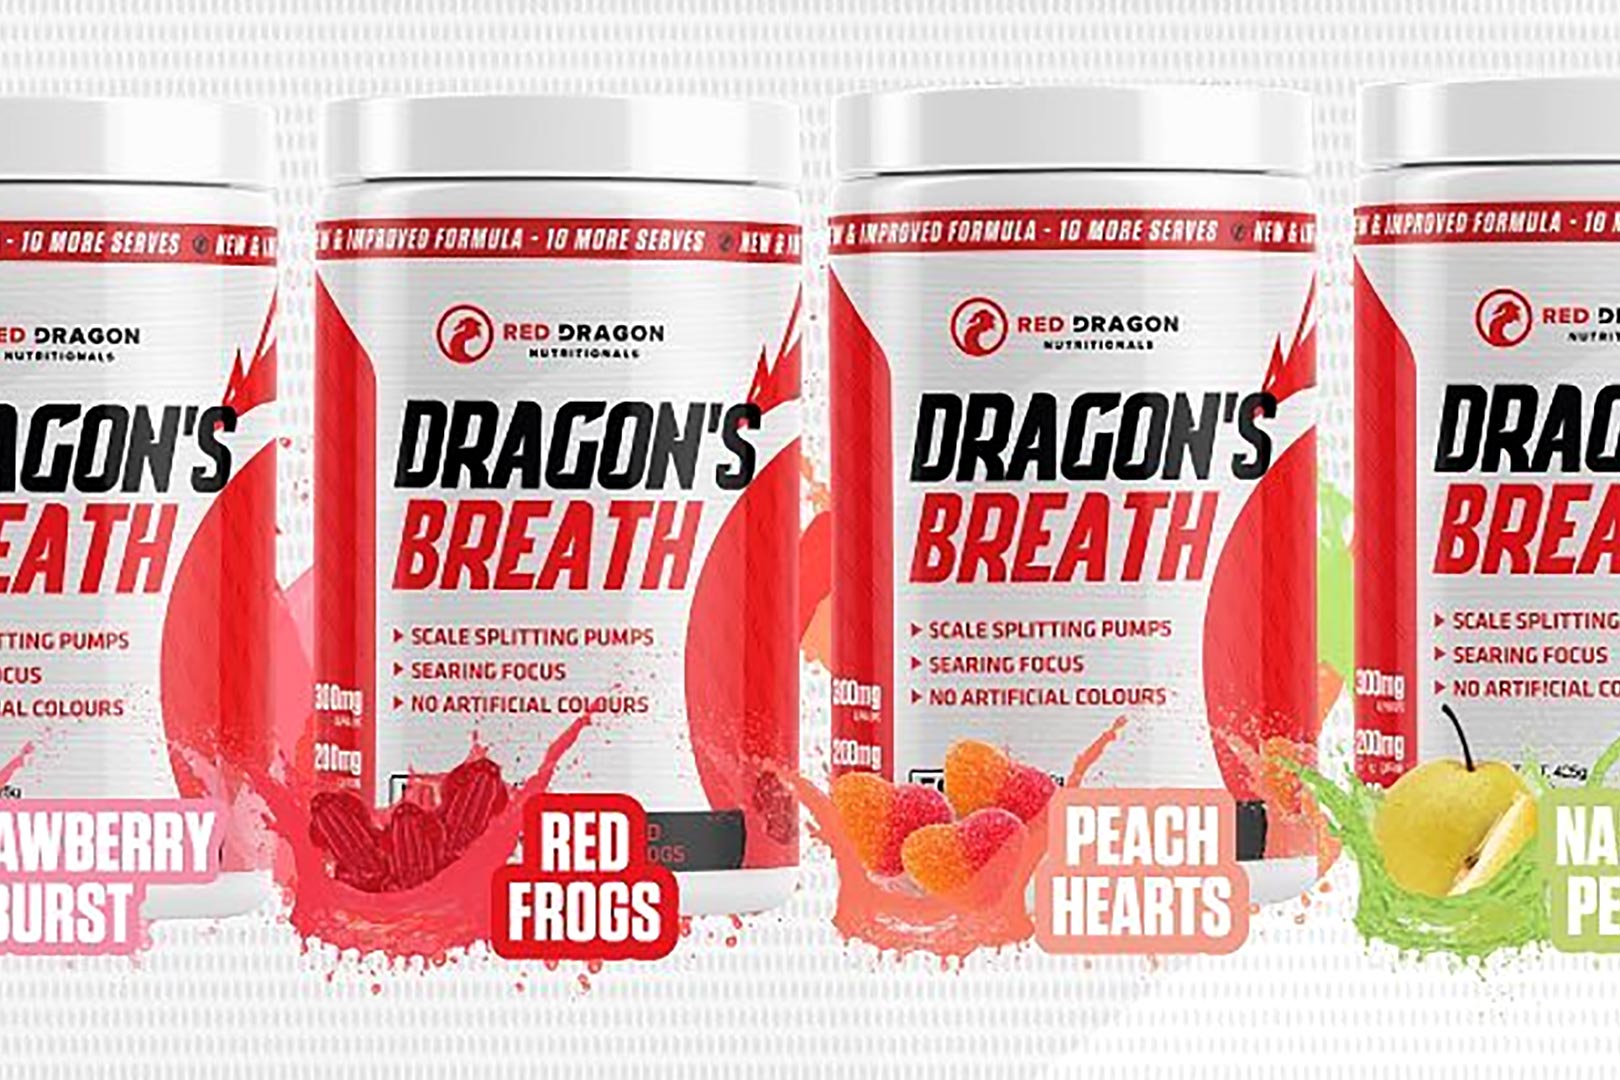 Red Dragon Brings Back Dragons Breath